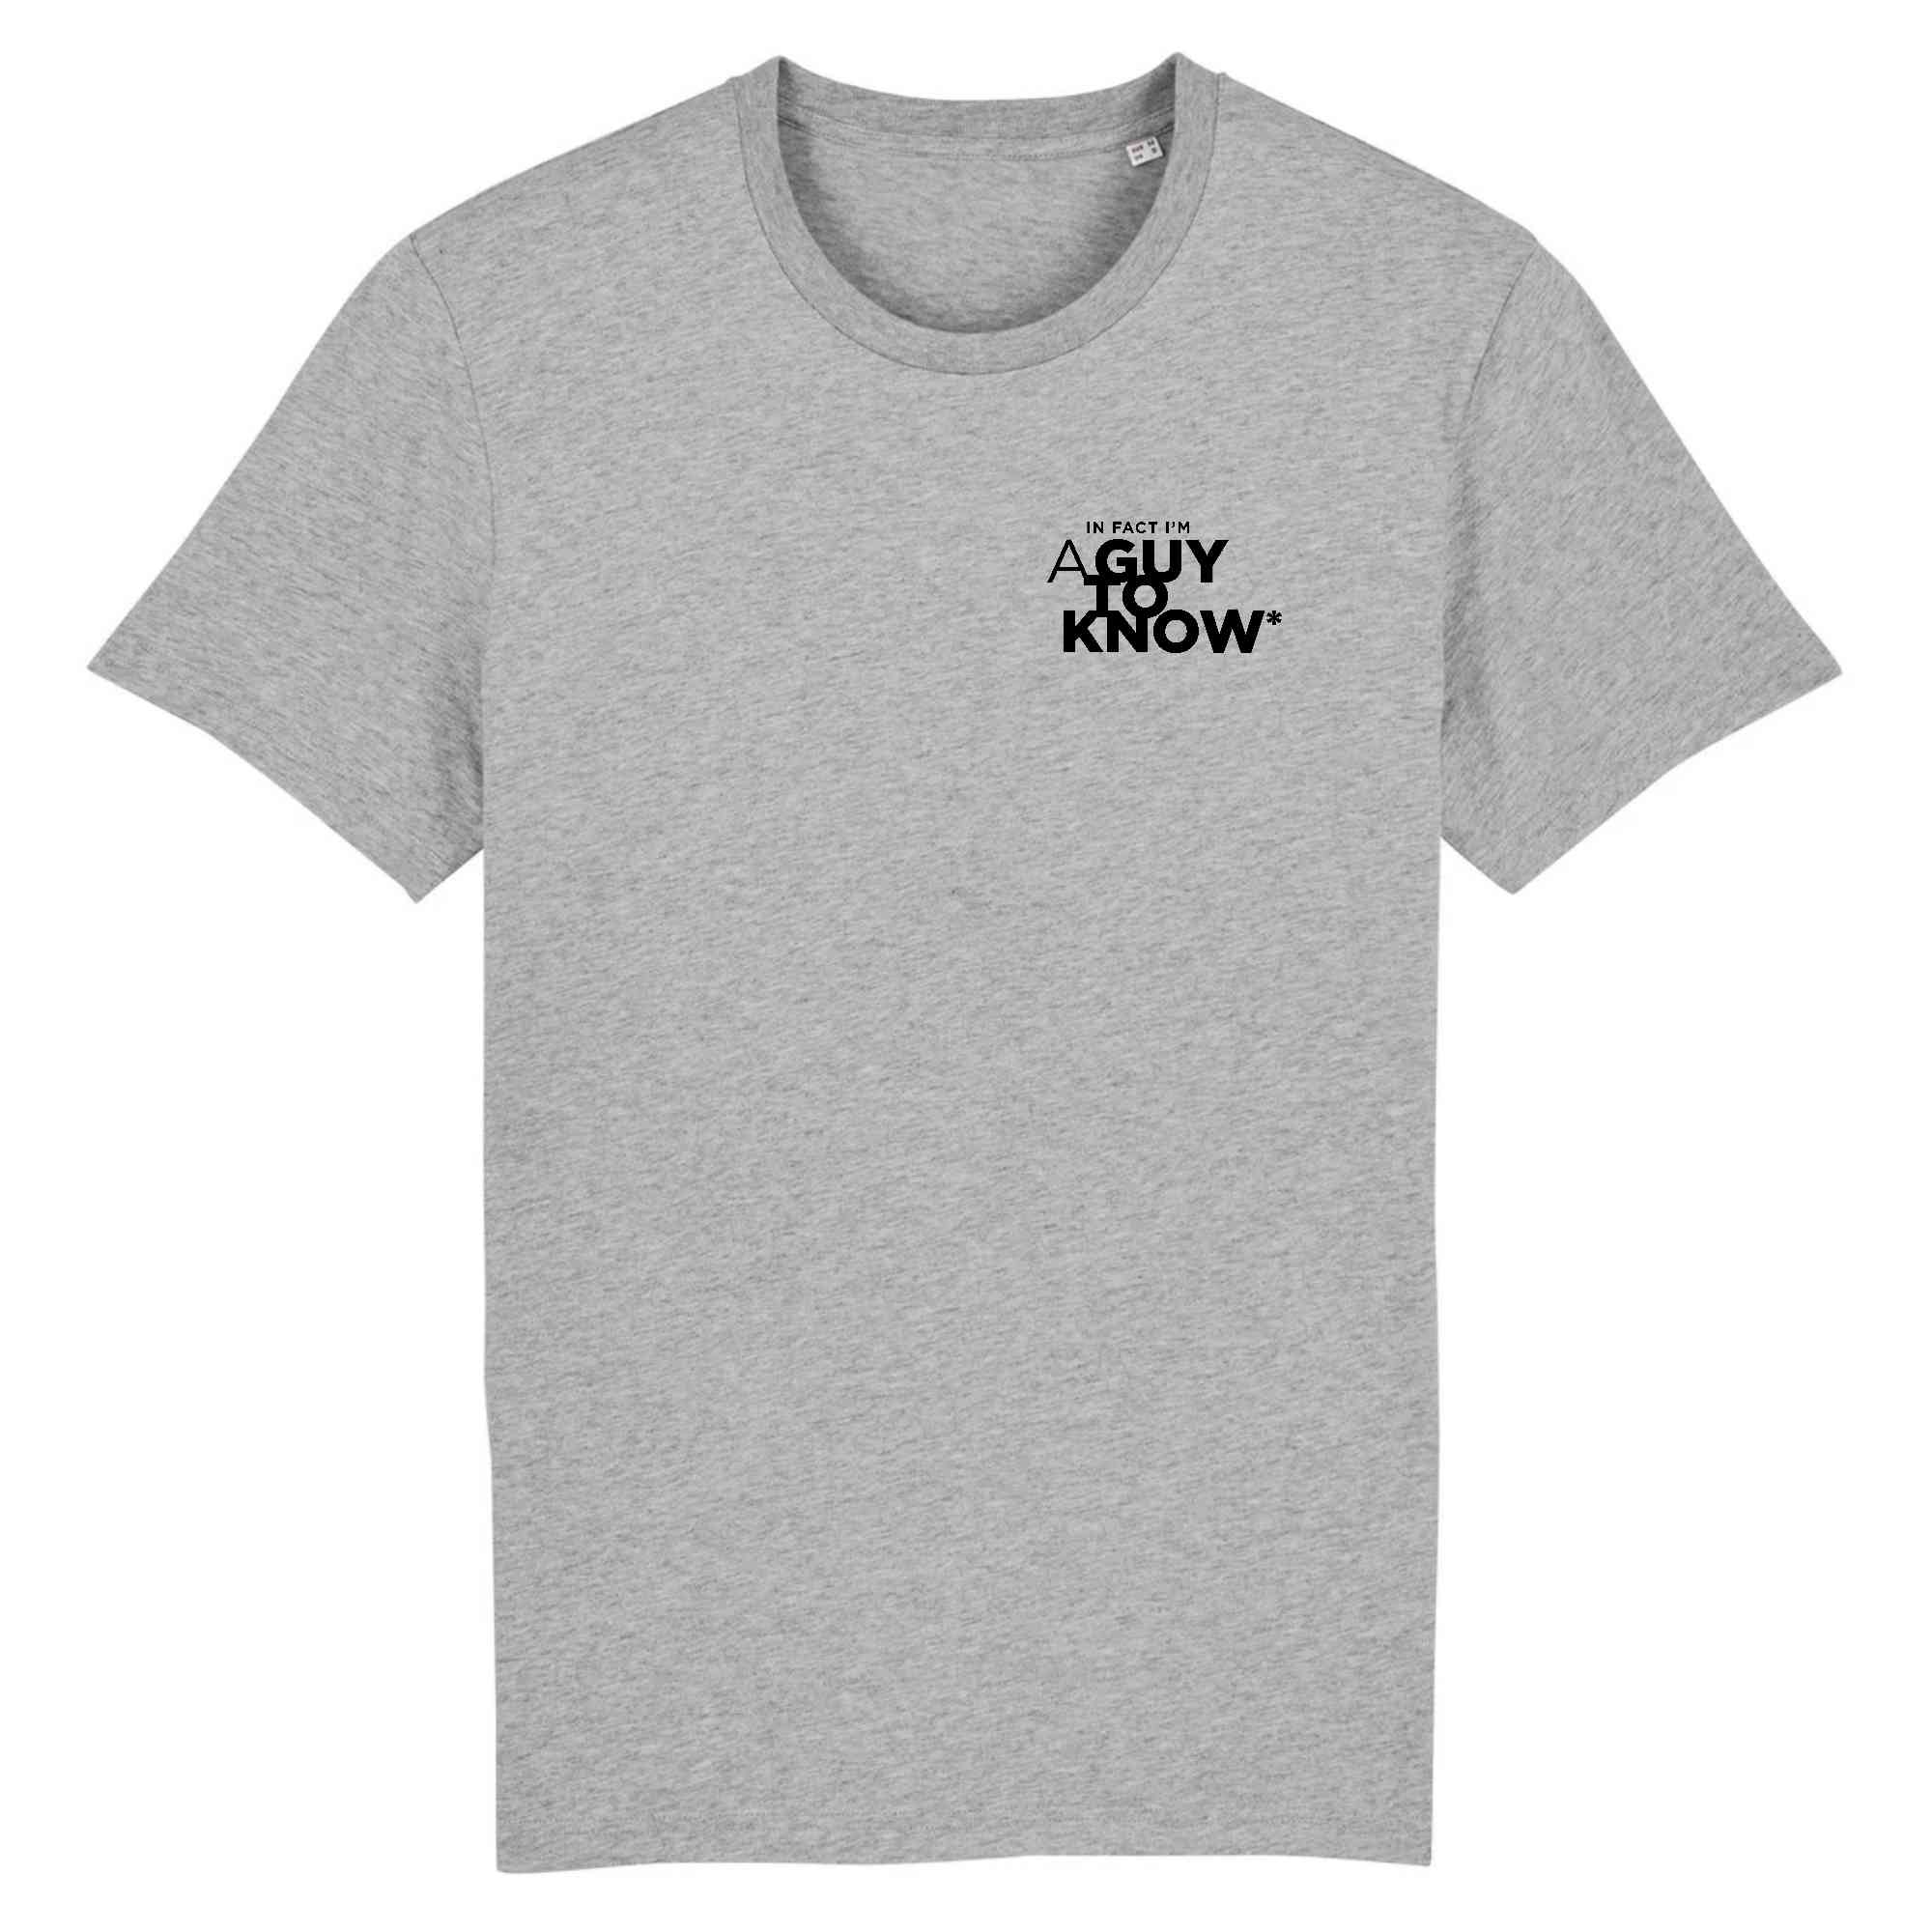 T-Shirt gris A GUY TO KNOW* - Collection tshirt inspirant en plusieurs couleurs